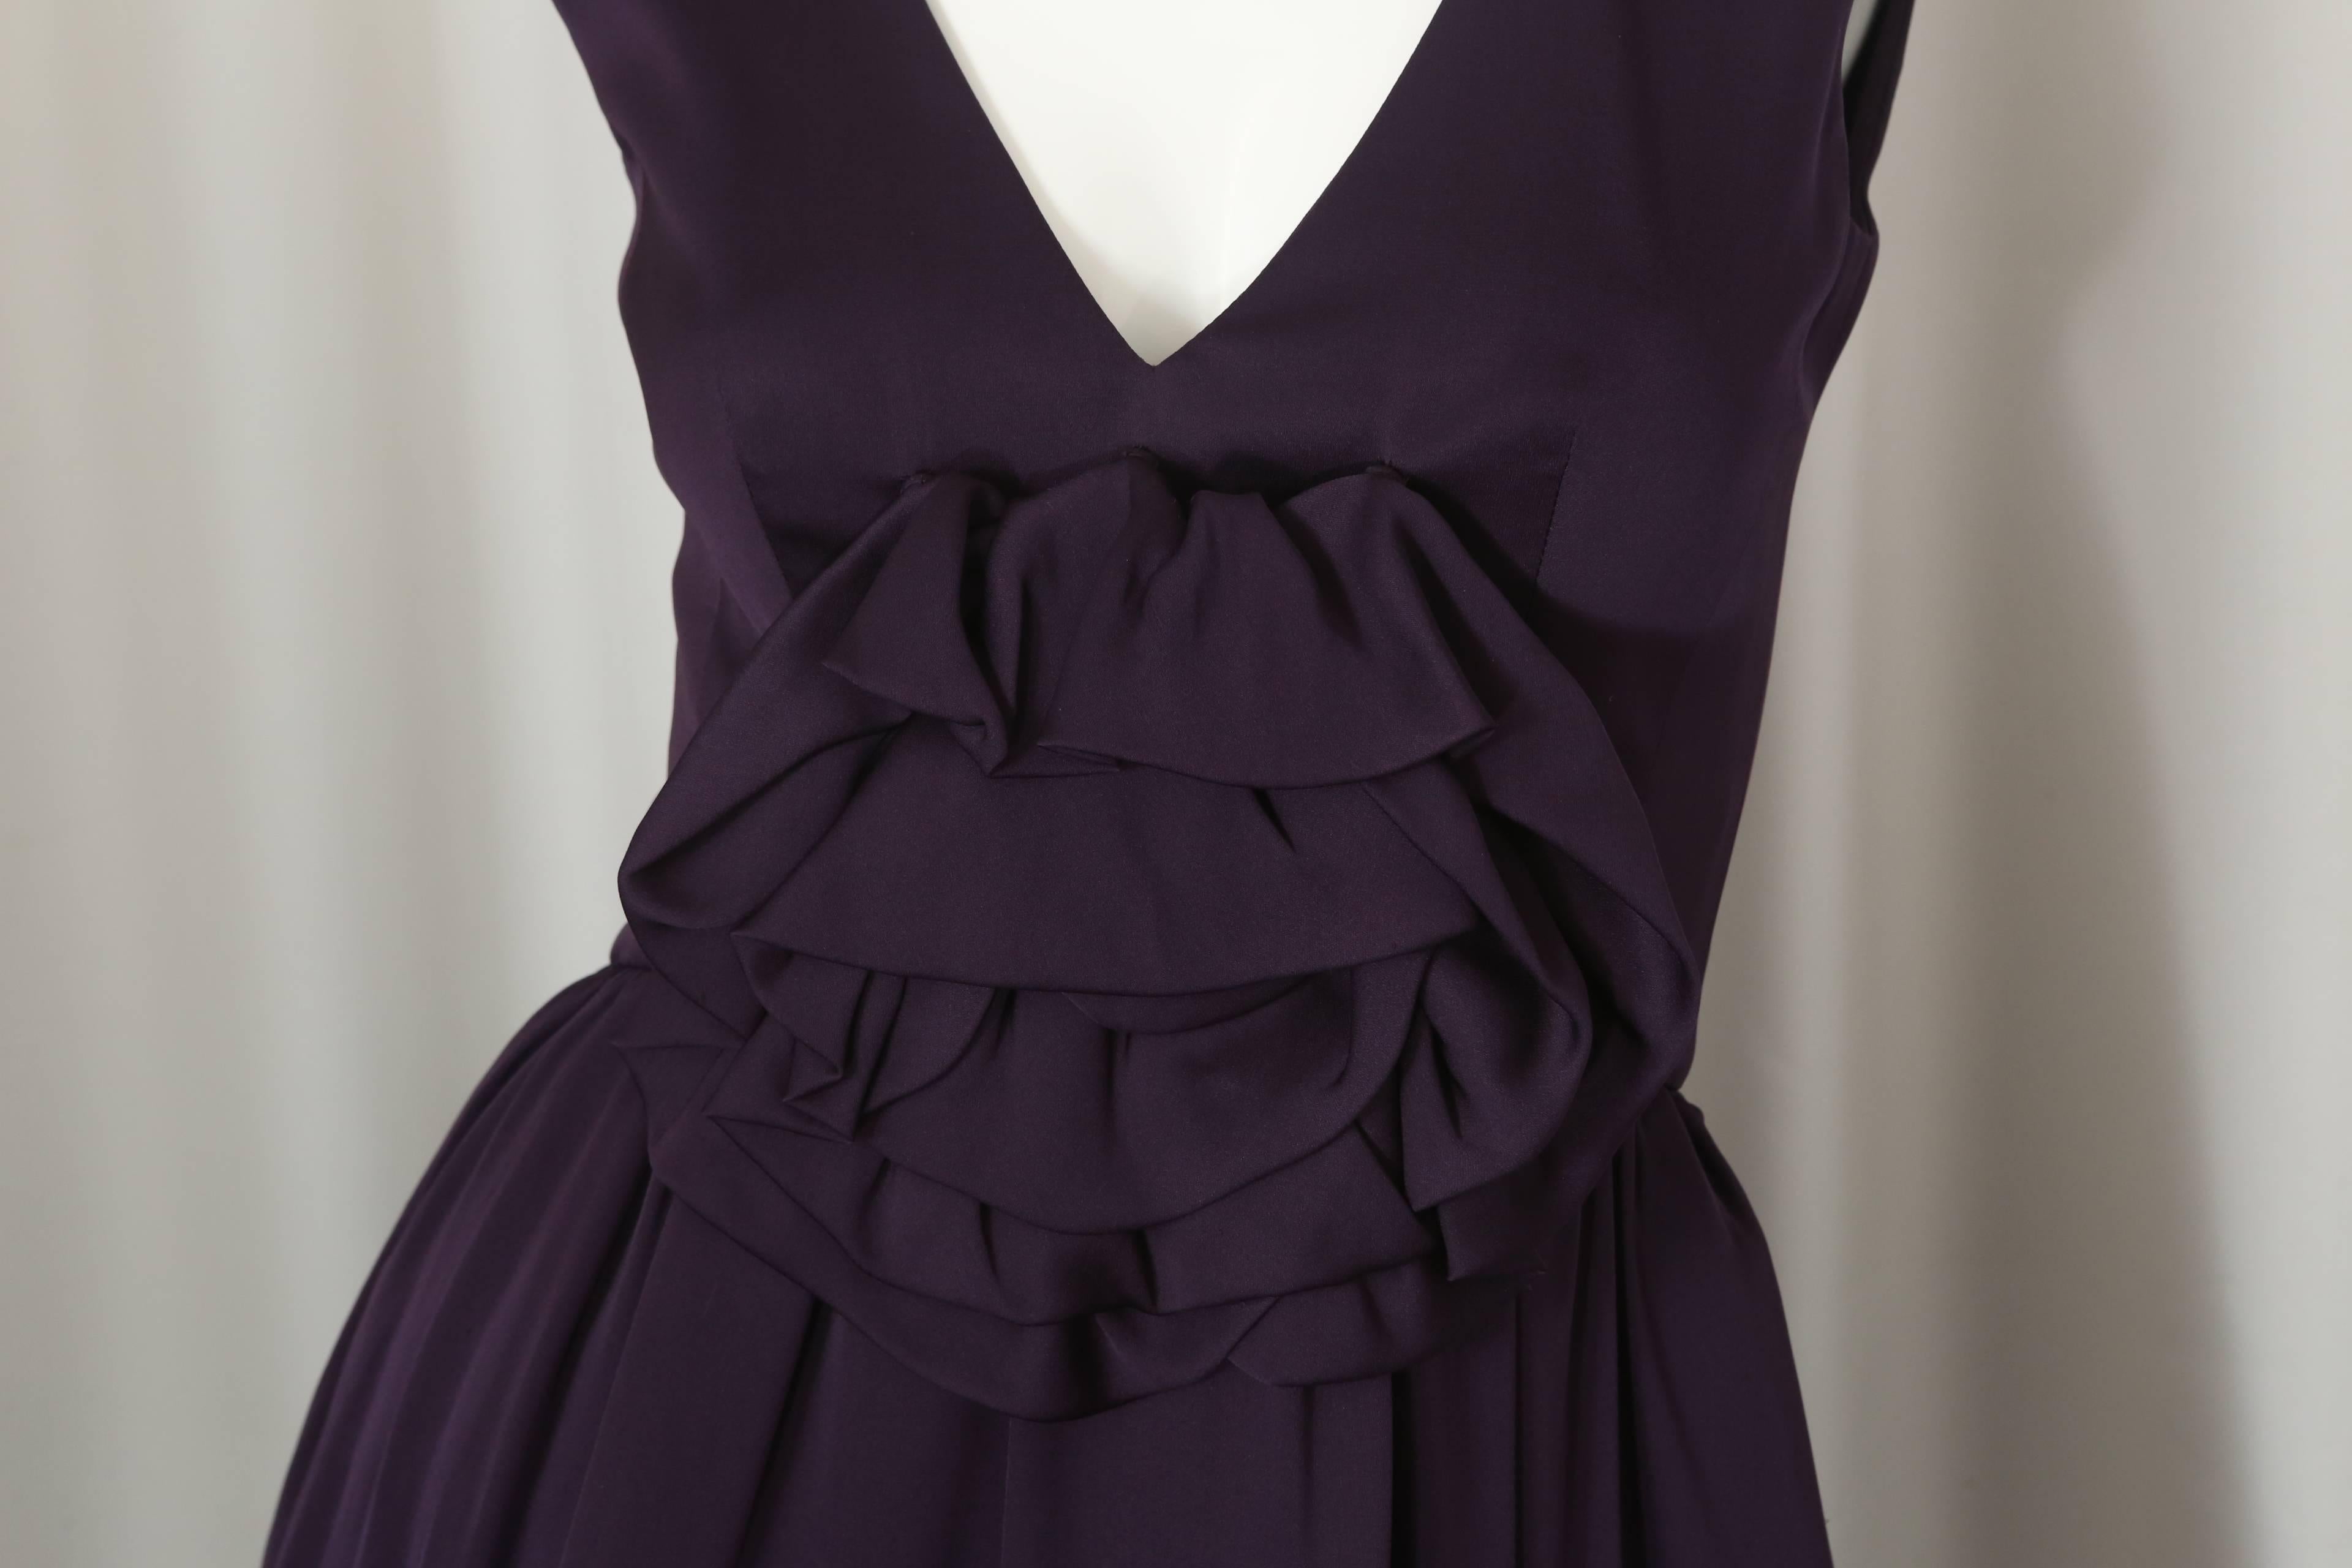 Asprey sleeveless purple cocktail dress with v-neck, removable flower & back zipper closure.